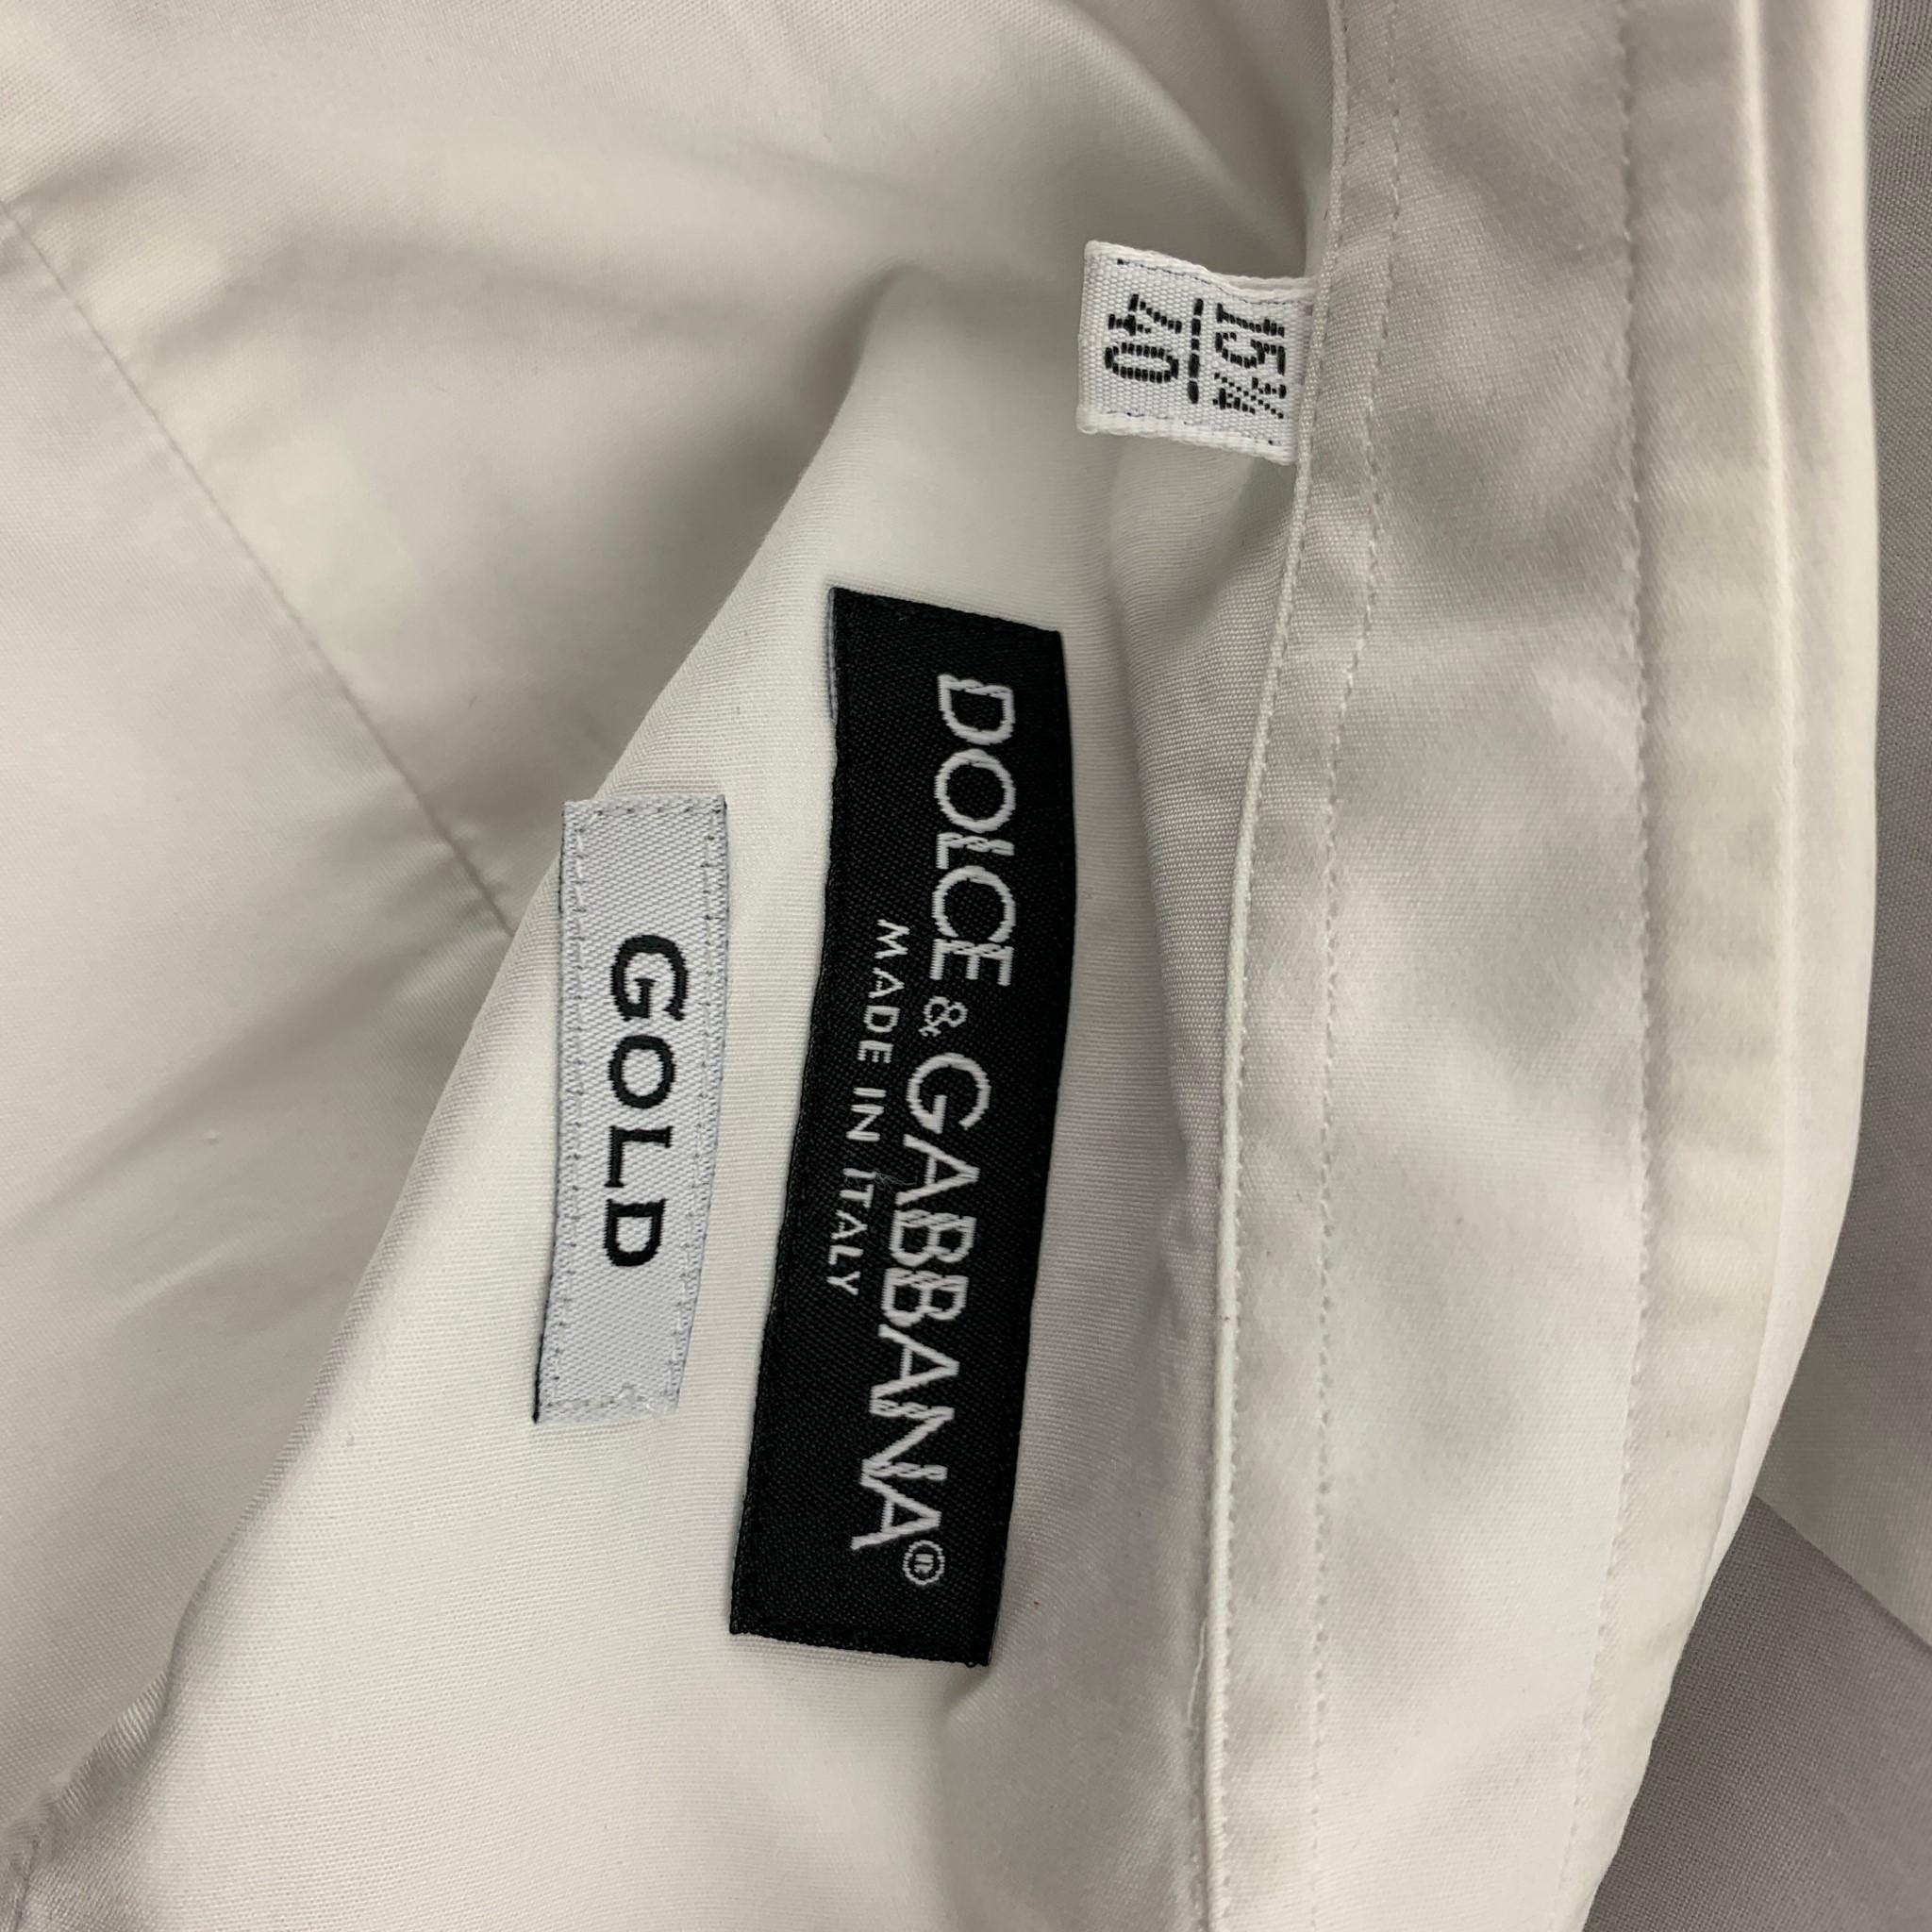 DOLCE & GABBANA Gold Size M White & Black Applique Cotton Tuxedo Shirt 1